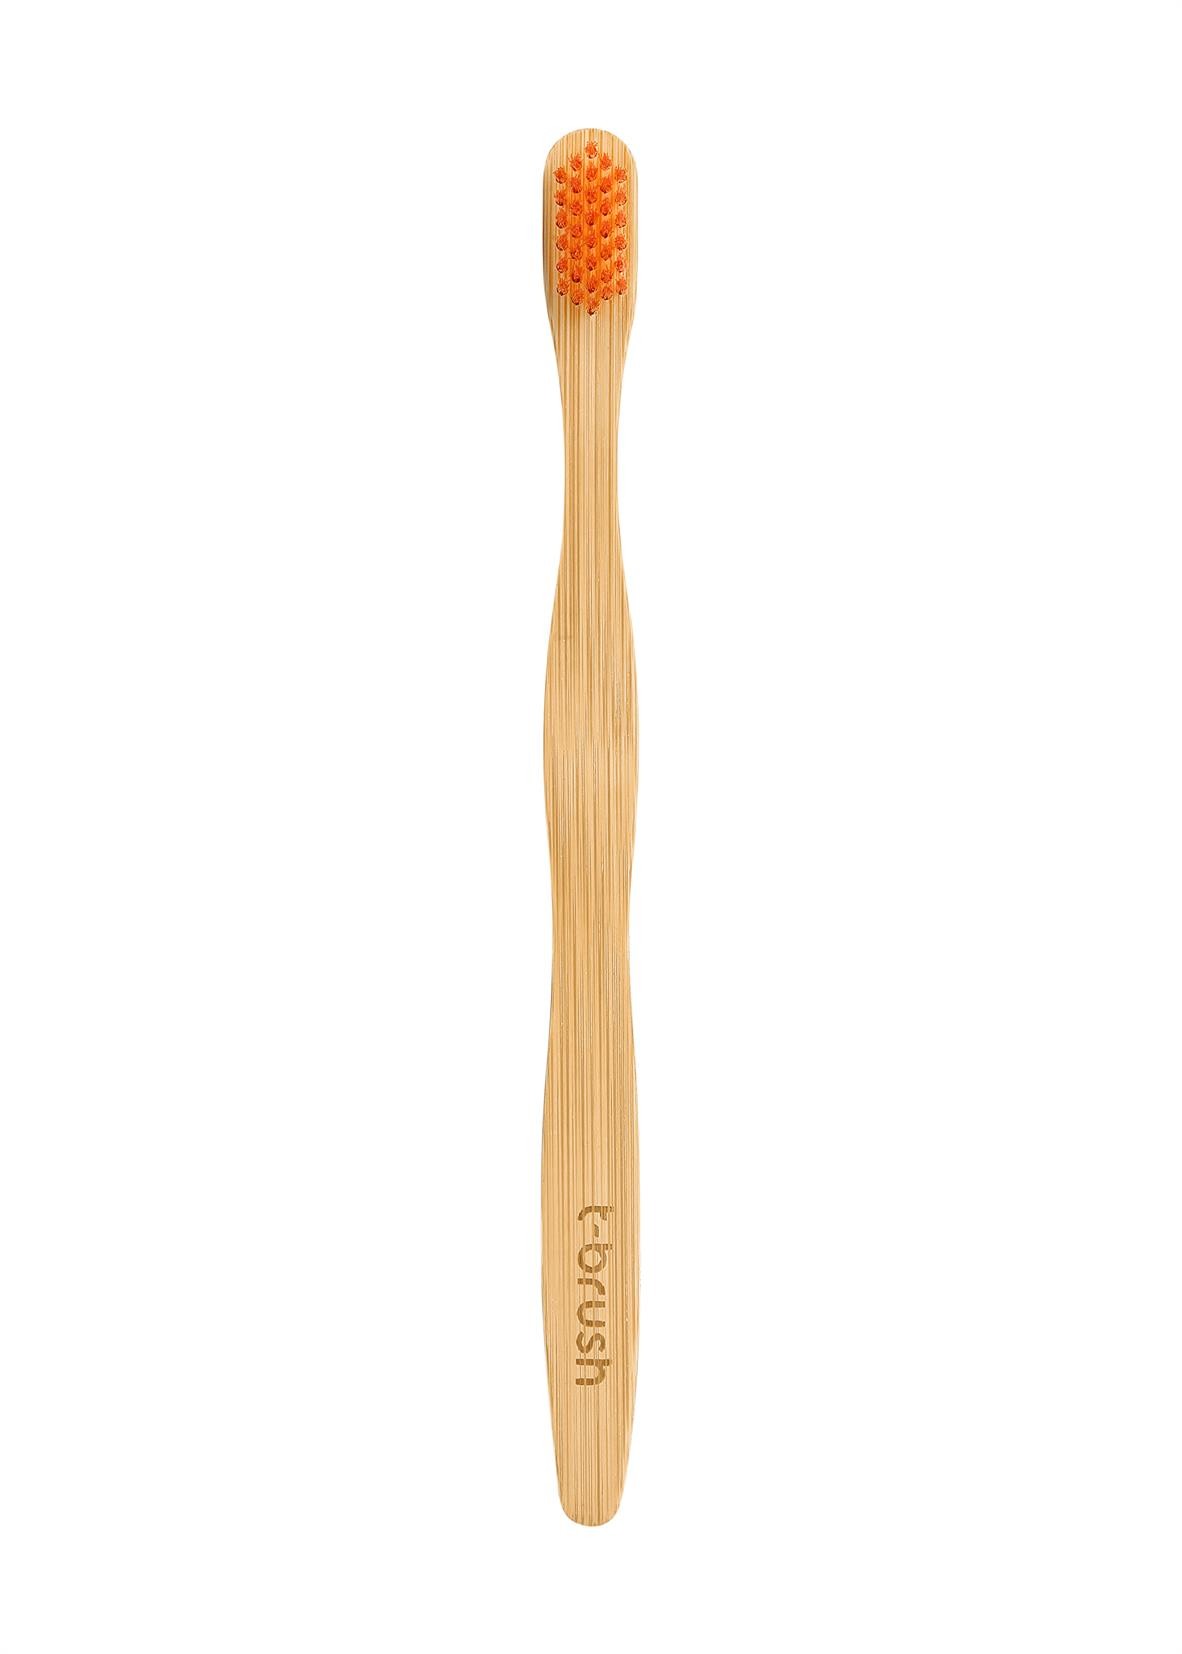 T-Brush Bambu Diş Fırçası – 4 adet – Orta Sert